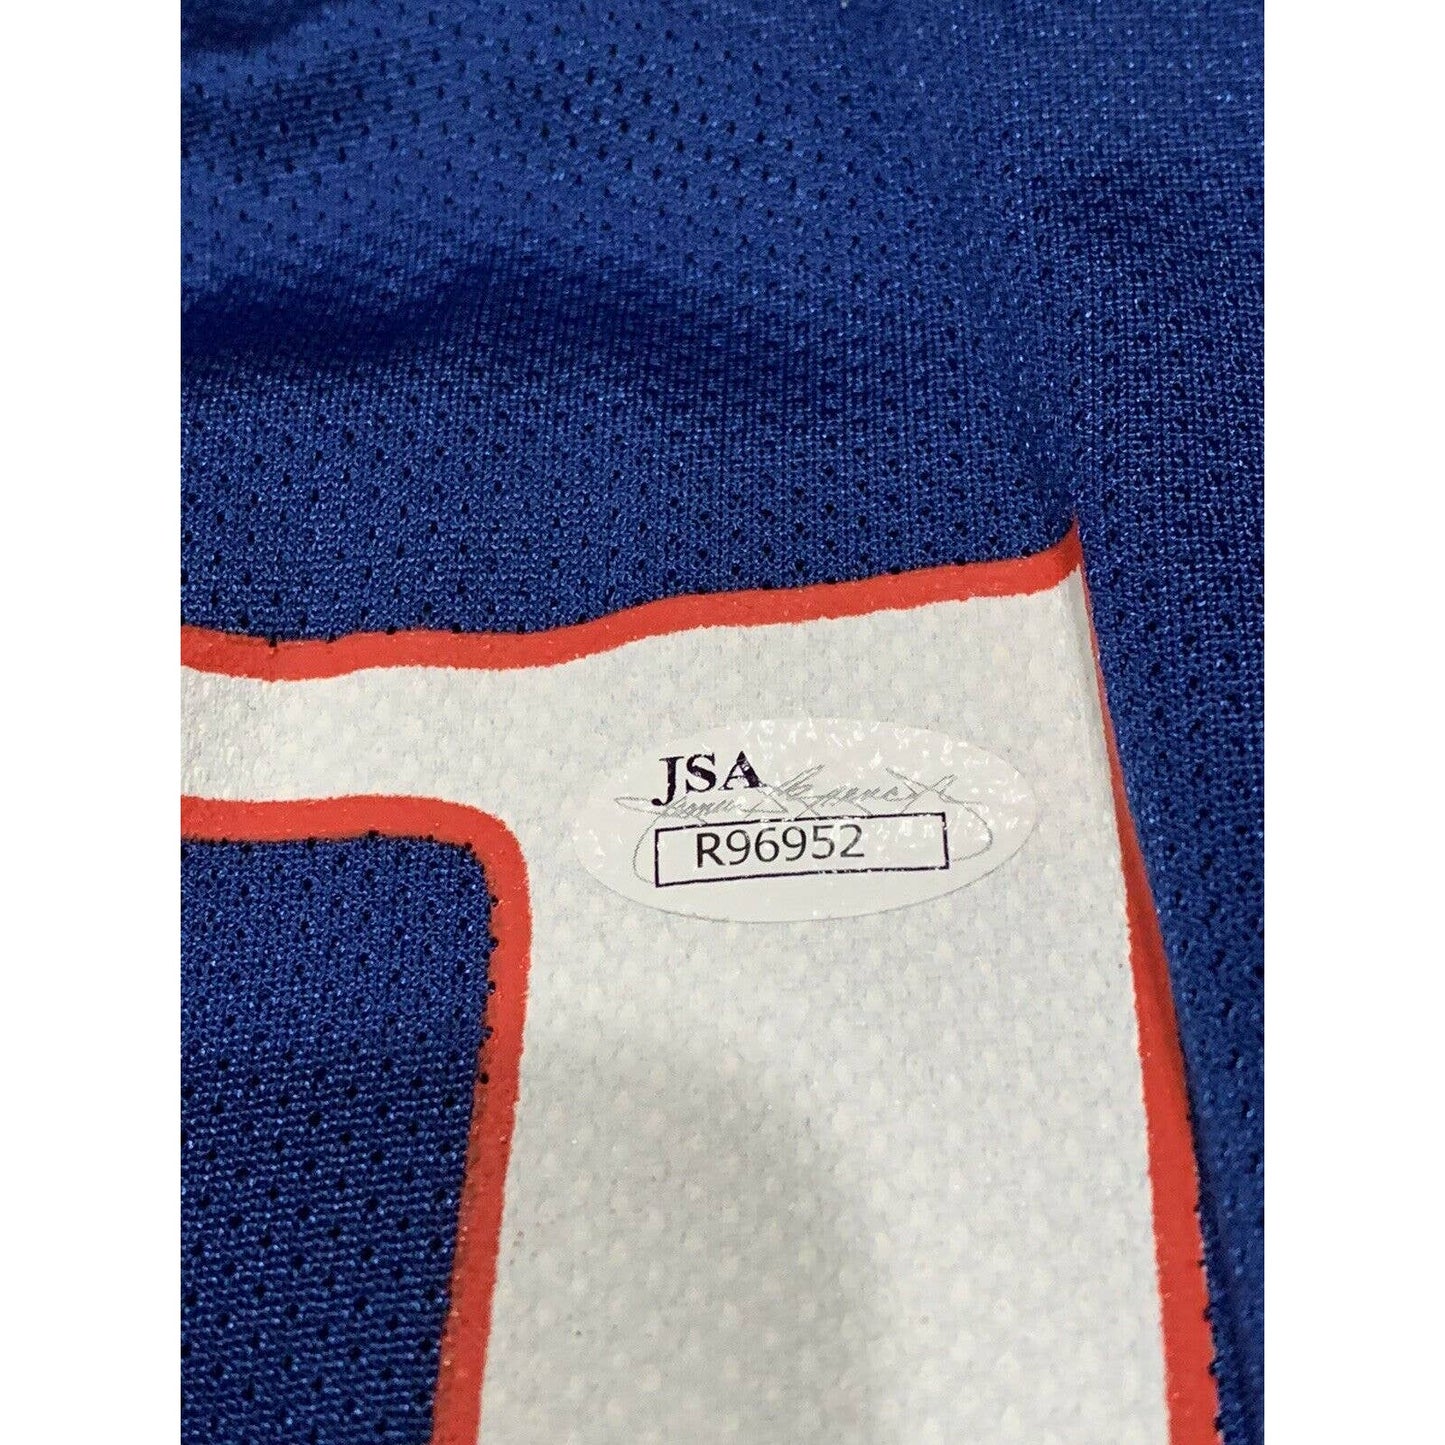 Josh Jackson Autographed/Signed Jersey JSA COA Kansas Jayhawks - TreasuresEvolved